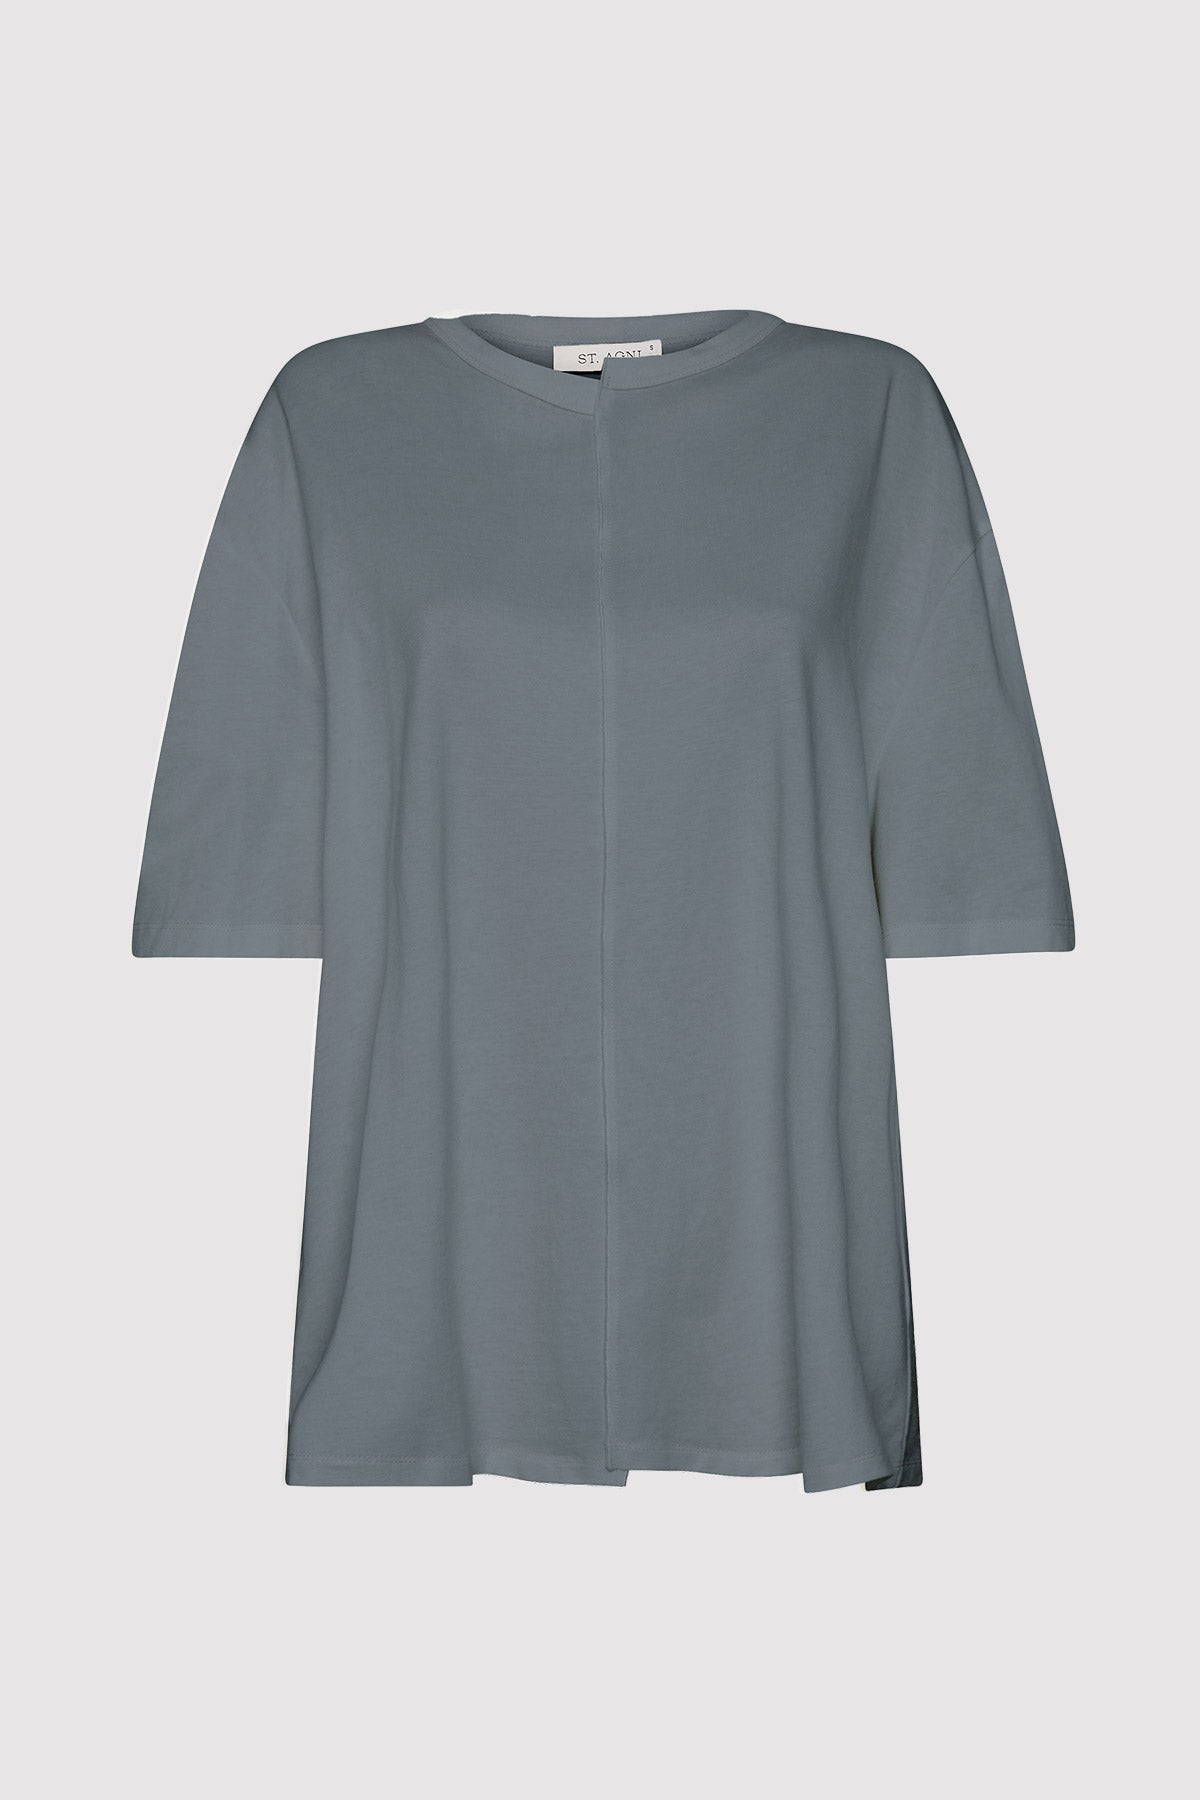 Deconstructed T- Shirt - Diesel Grey